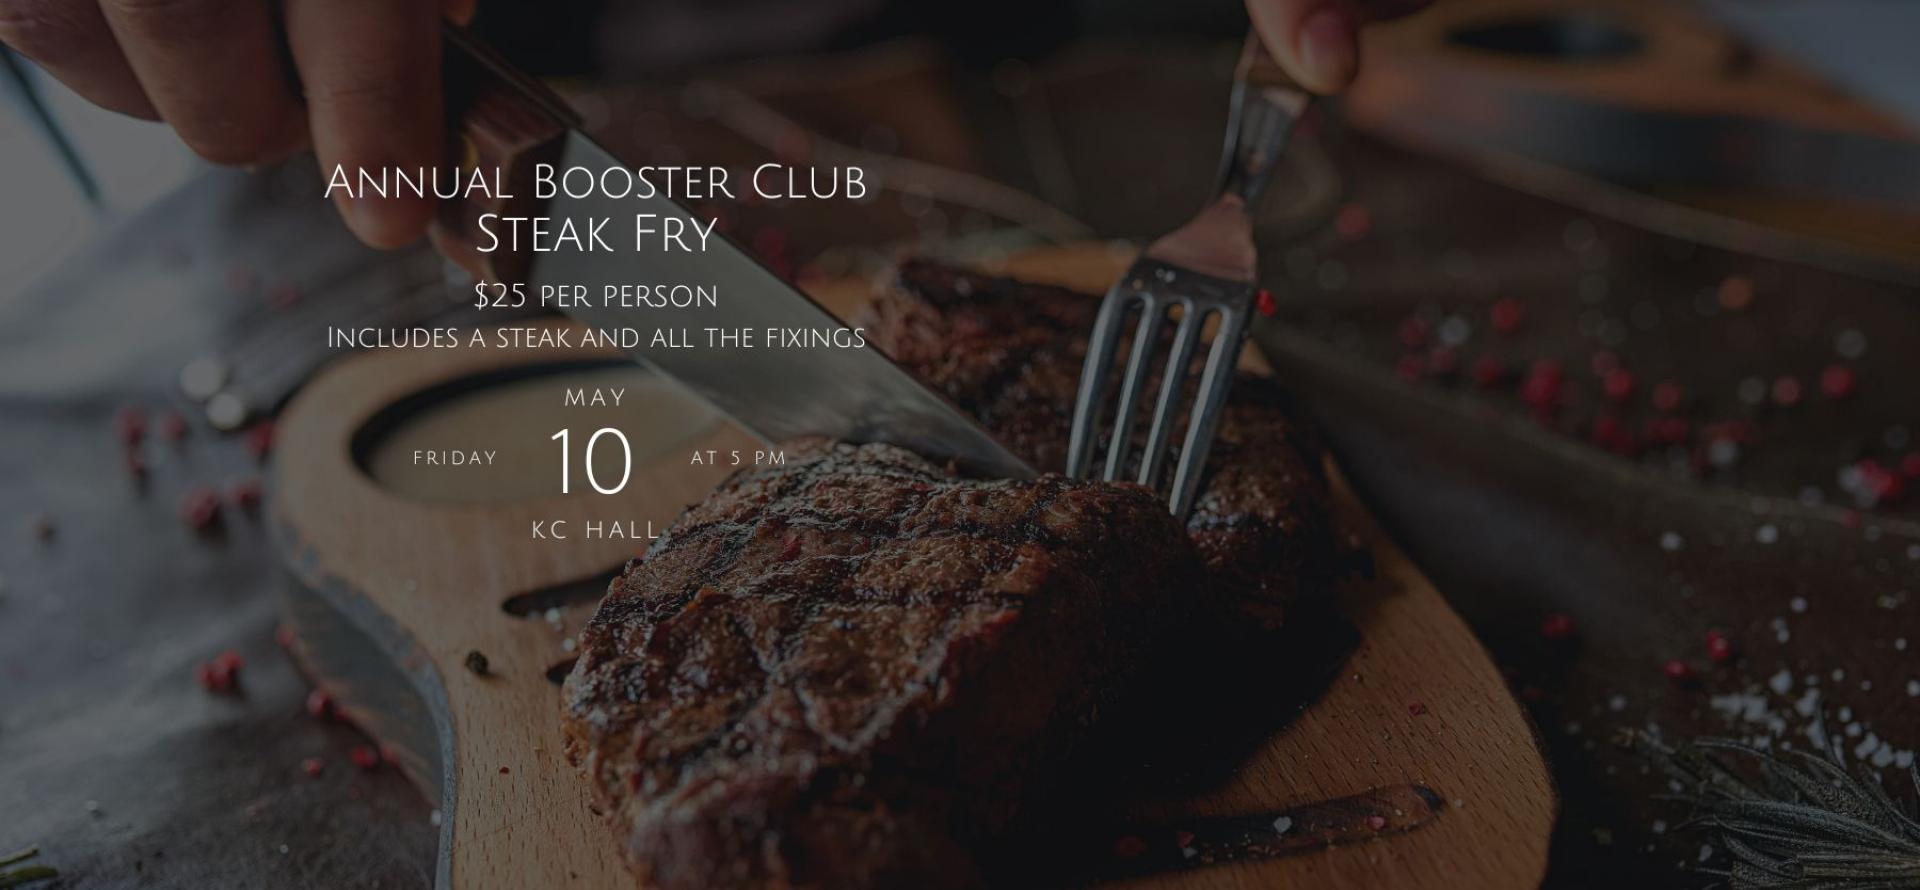 Annual Booster Club Steak Fry